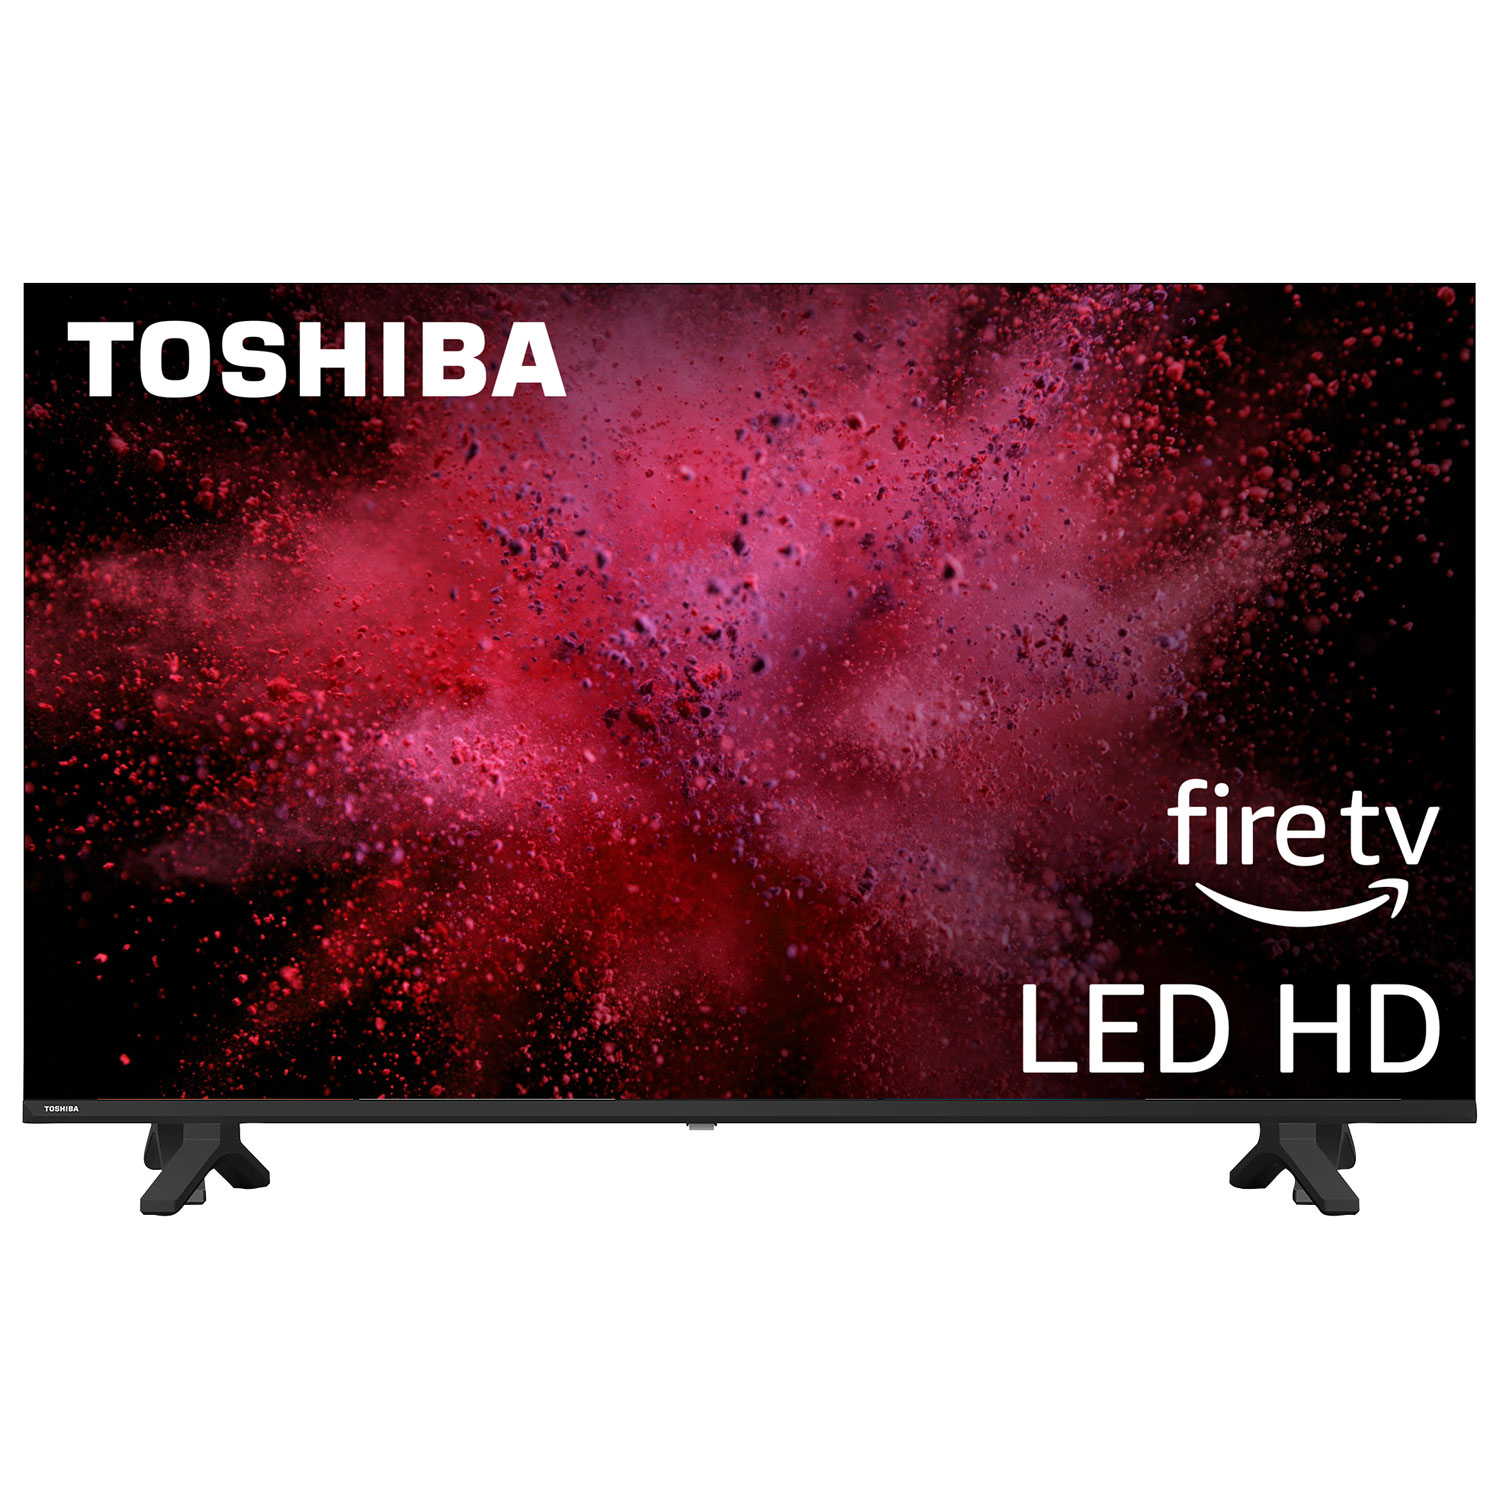 Toshiba 32" 720p HD LED Smart TV (32V35C) - Fire TV Edition - 2021